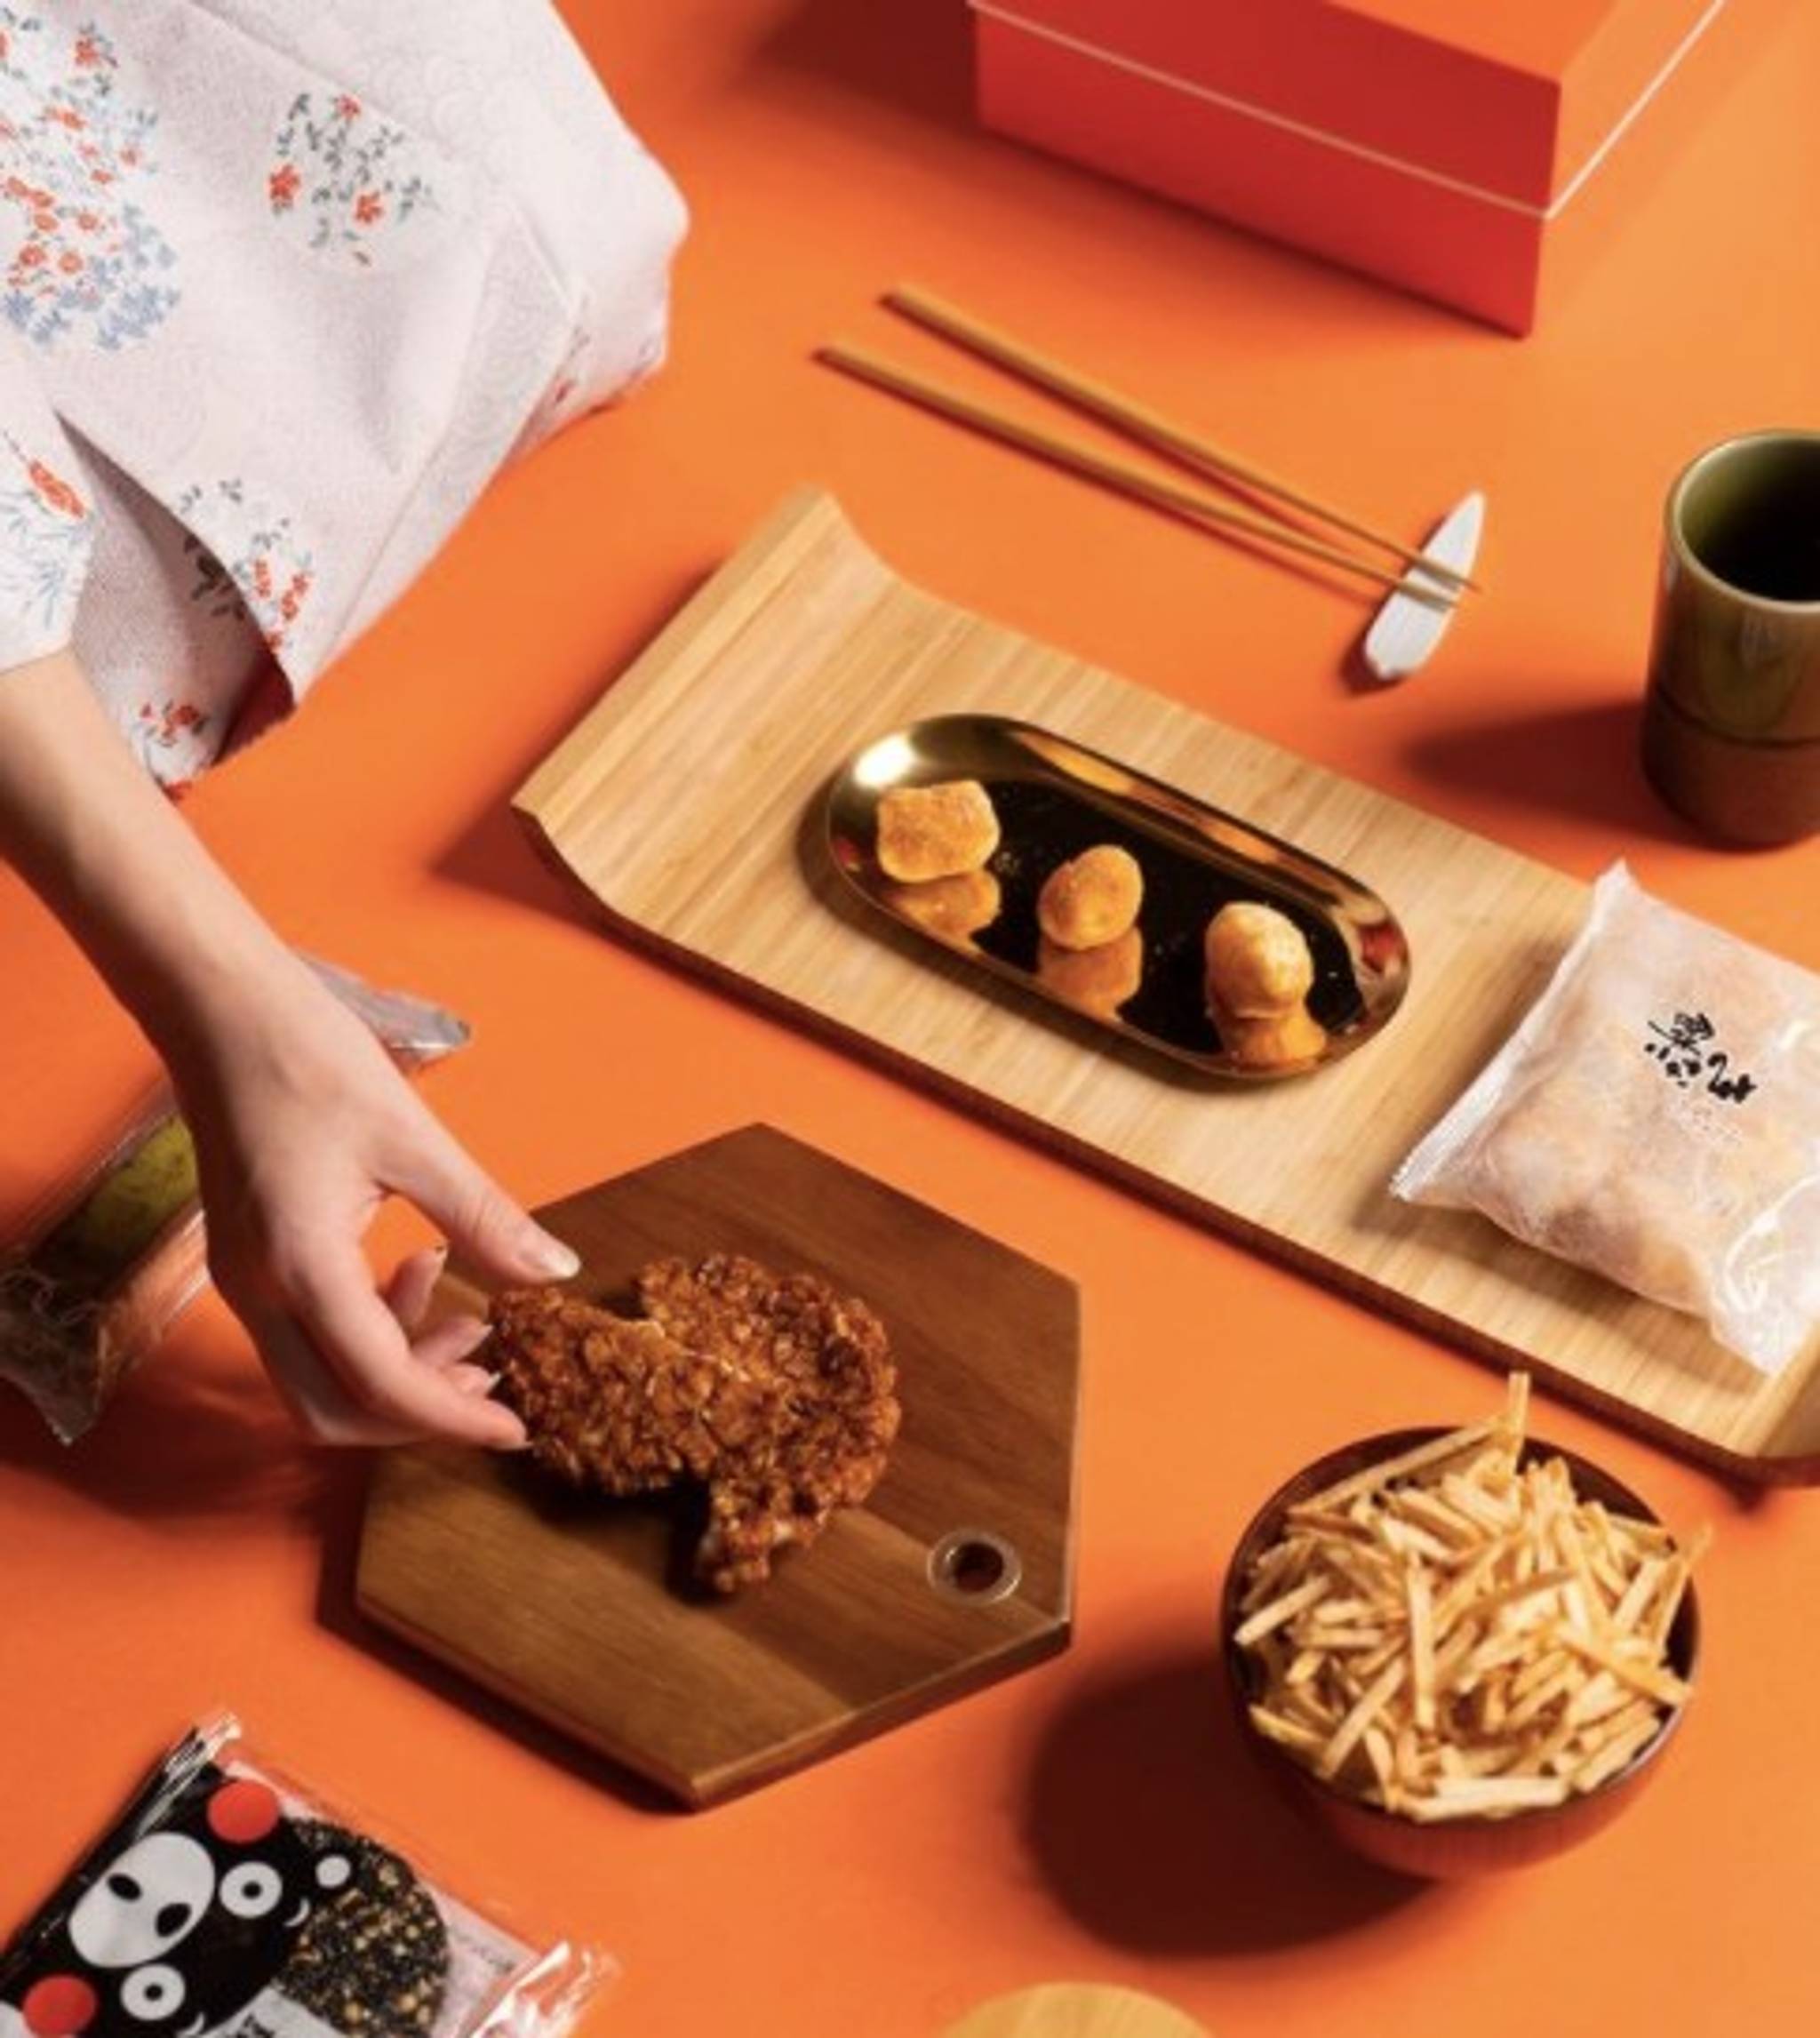 Bokksu boxes recreate the joy of travel to Japan